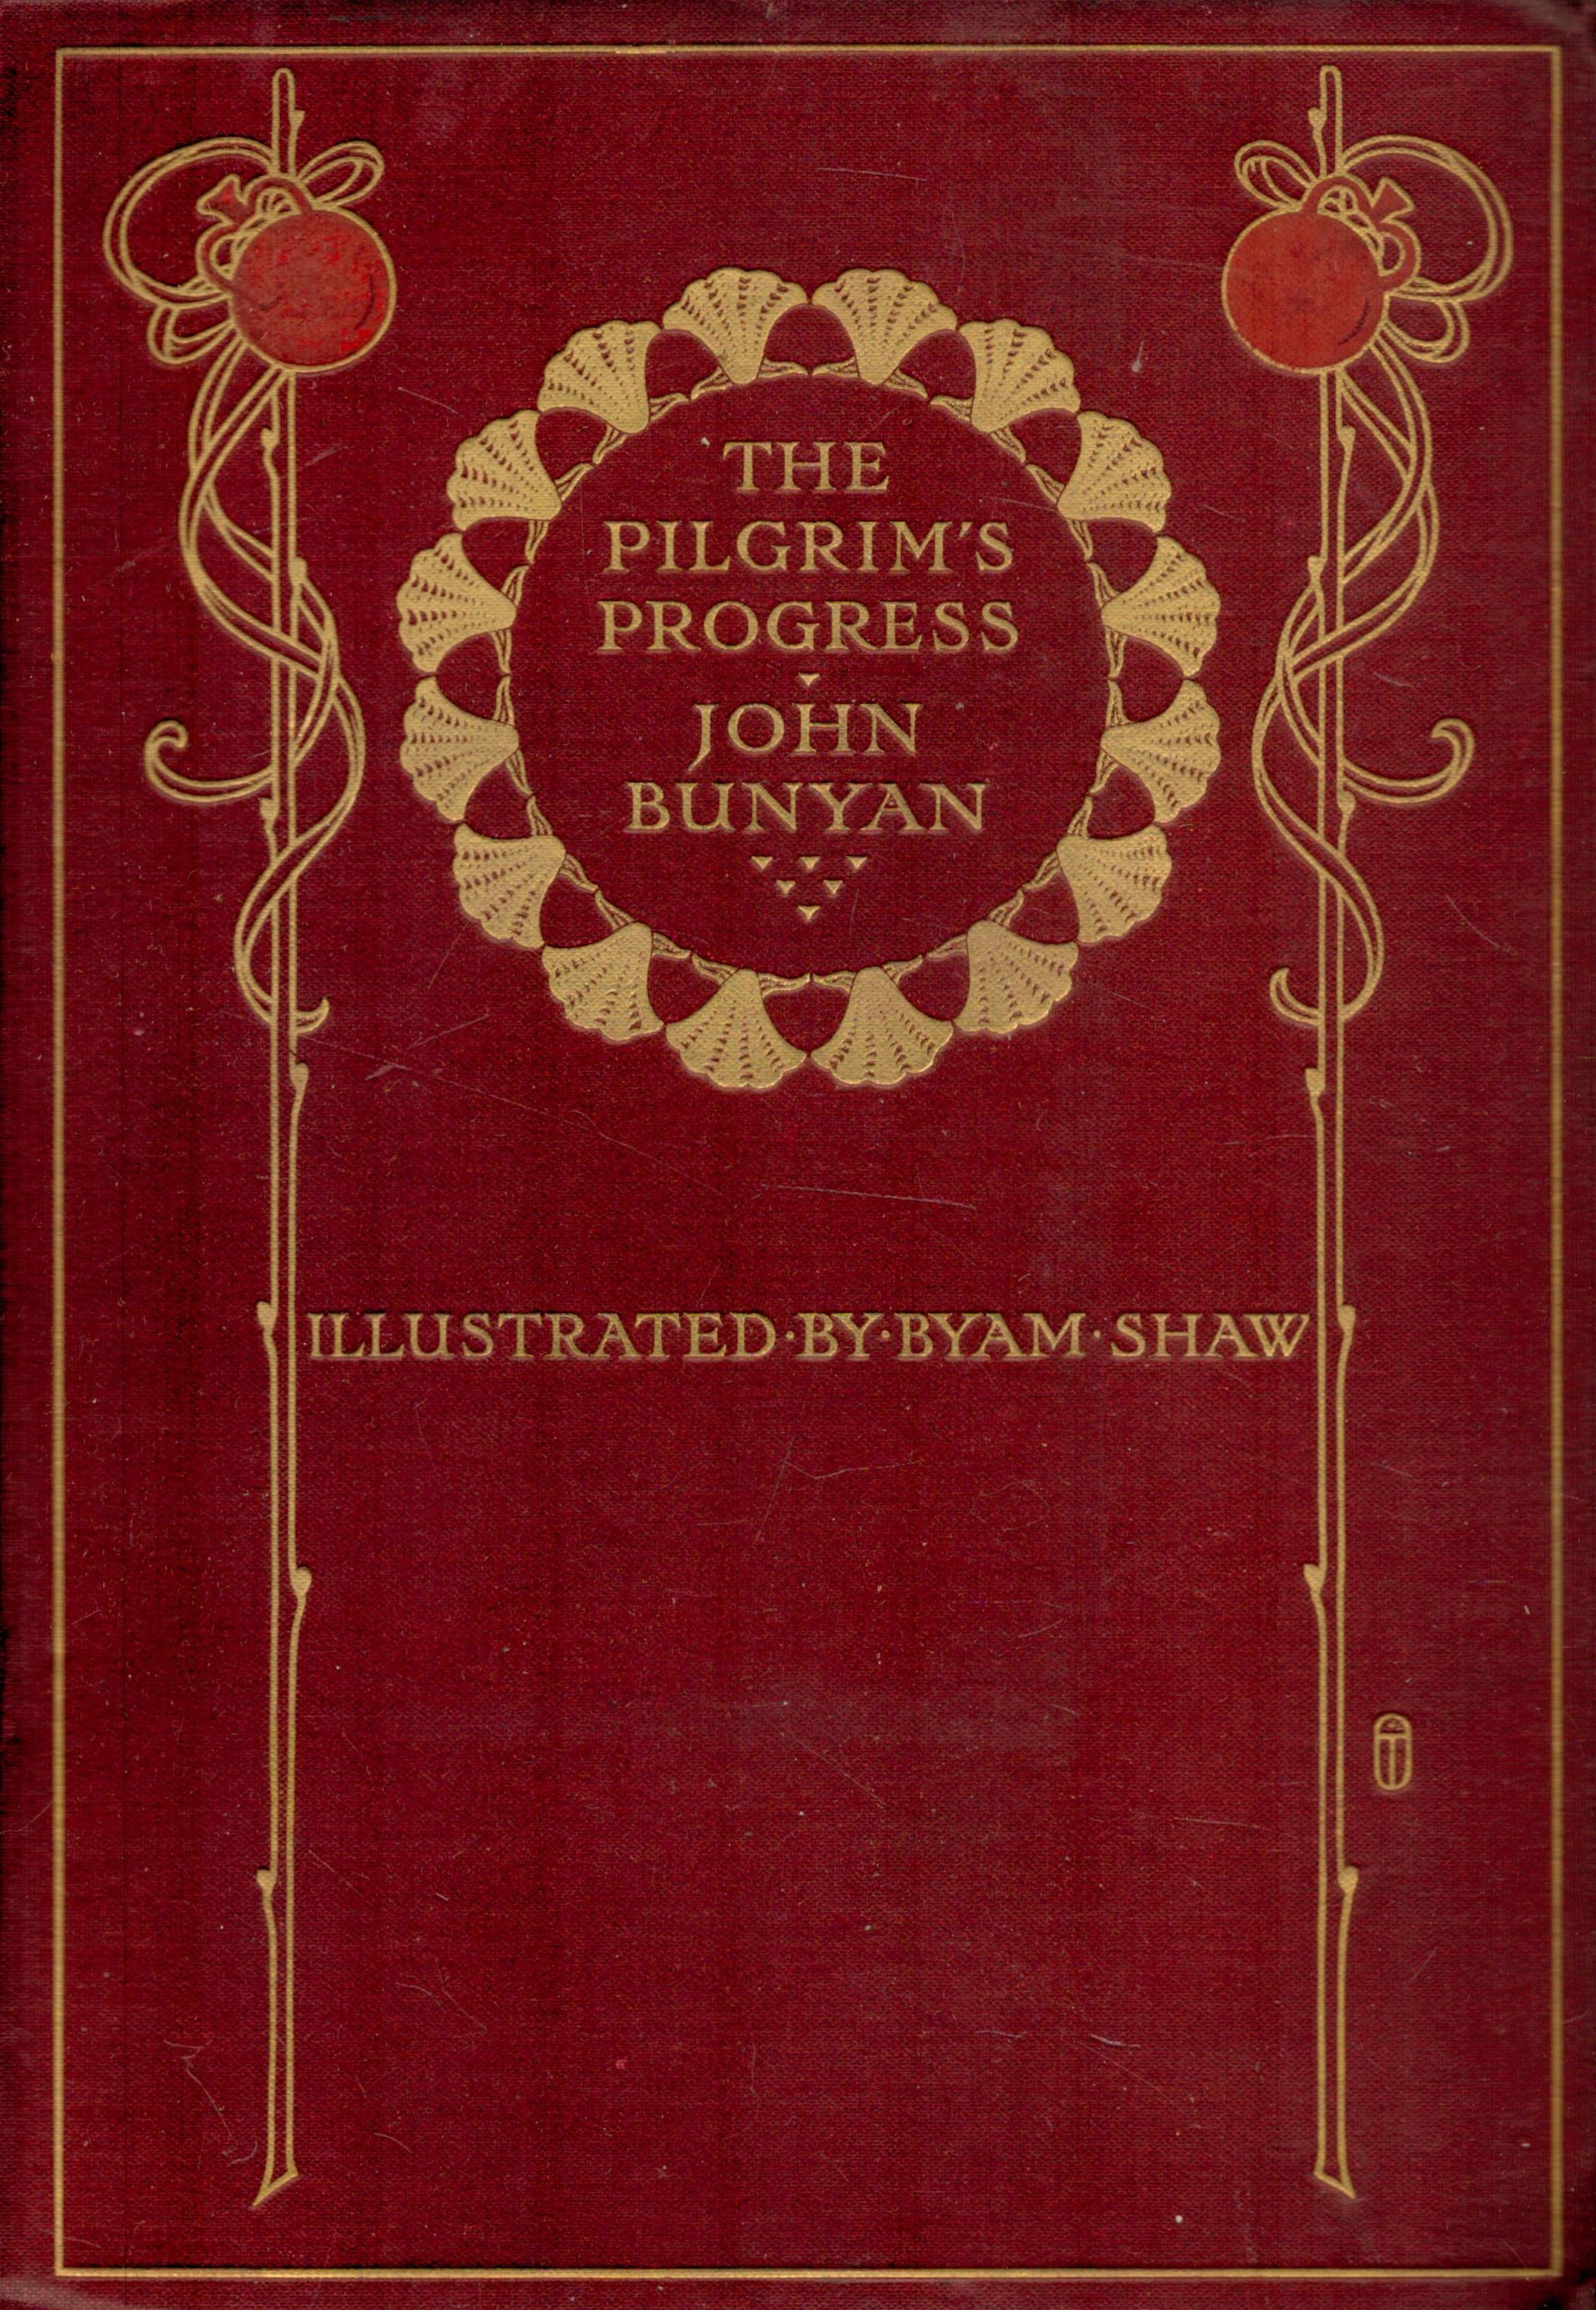 John Bunyan The Pilgrim's Progress Published by T. C. and E. C. Jack, London and Edinburgh.